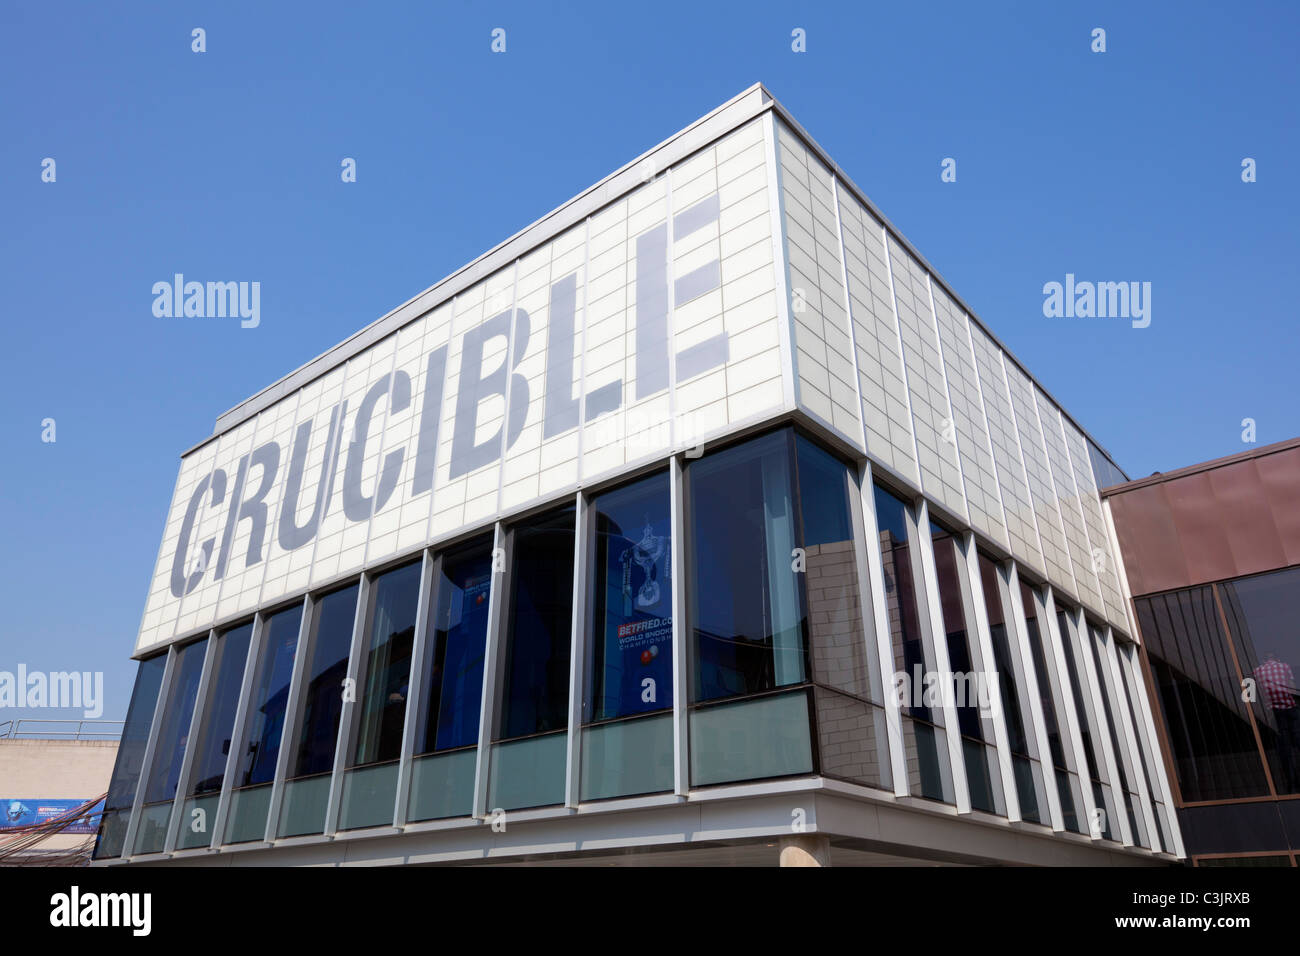 Crucible theatre Sheffield City centre South Yorkshire GB UK EU Europe Stock Photo